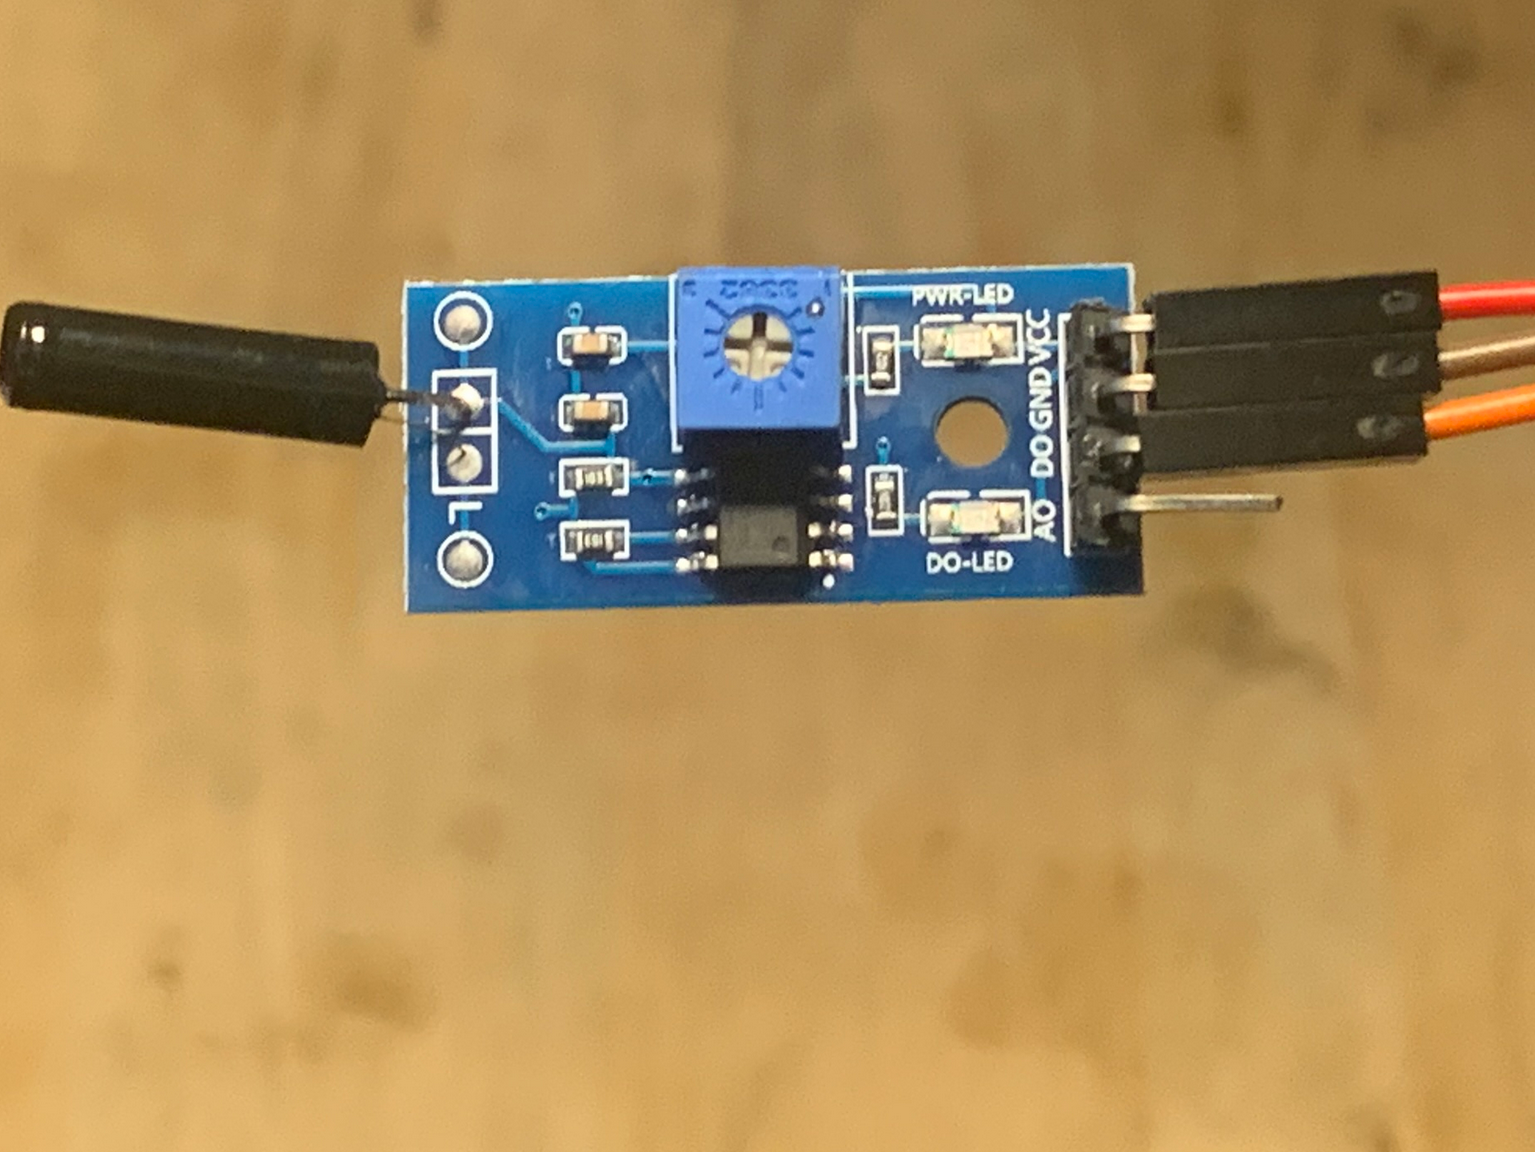 Step 6 - Connecting the Vibration Sensor